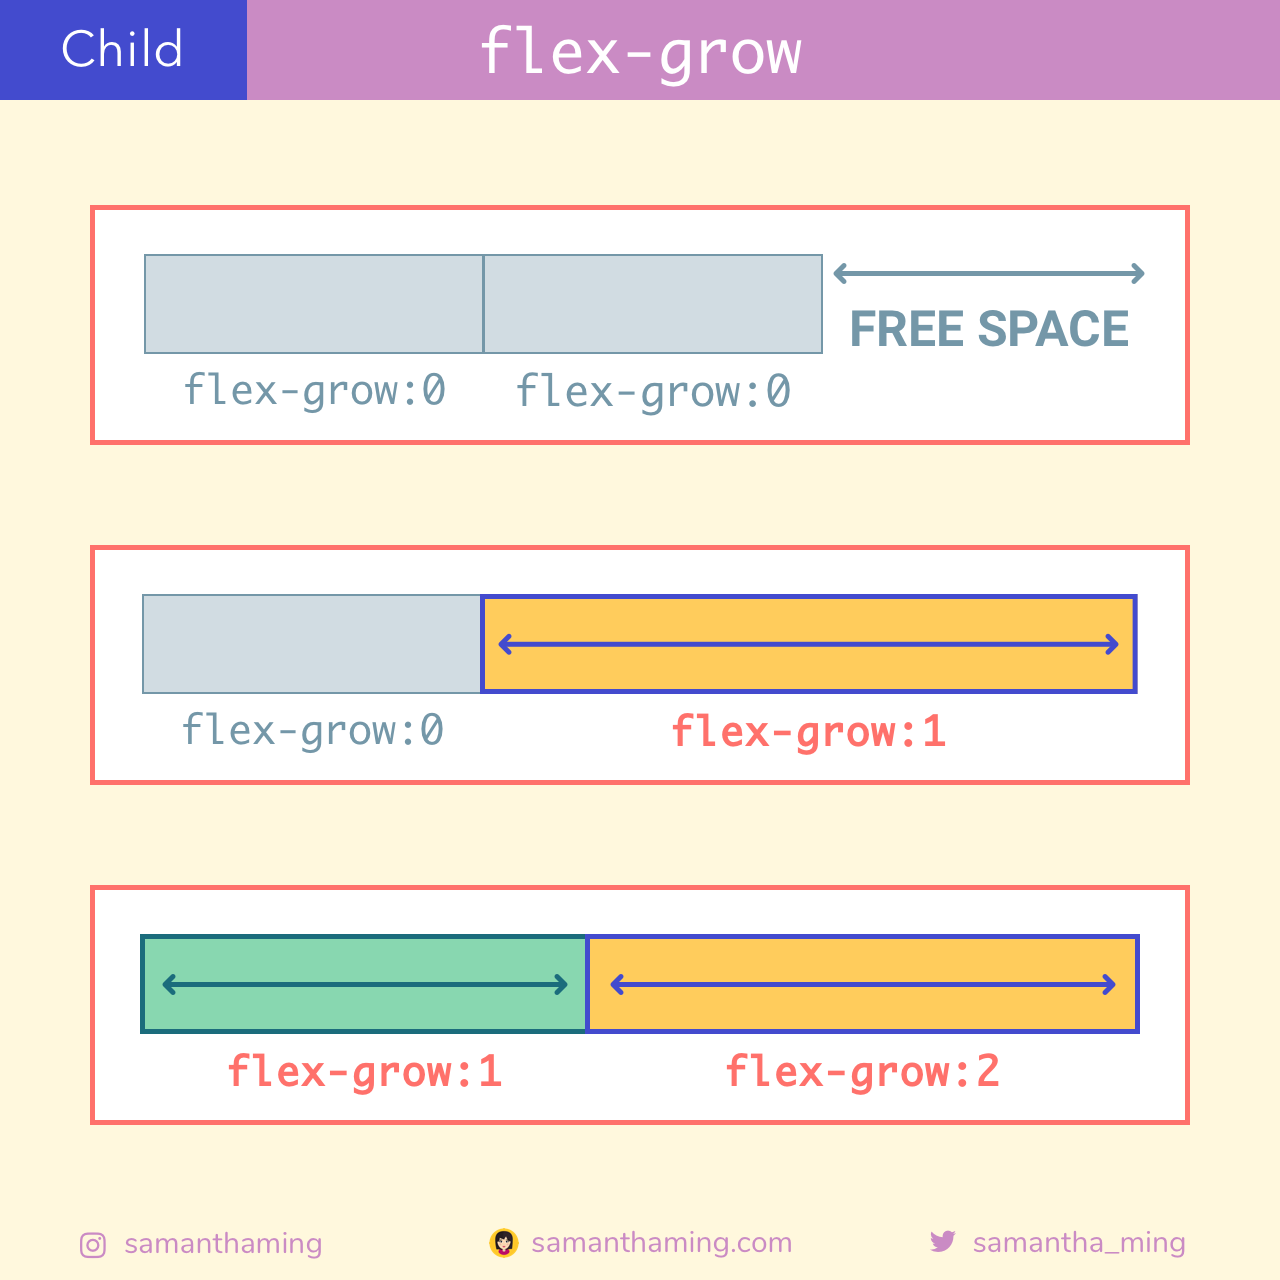 flex-grow